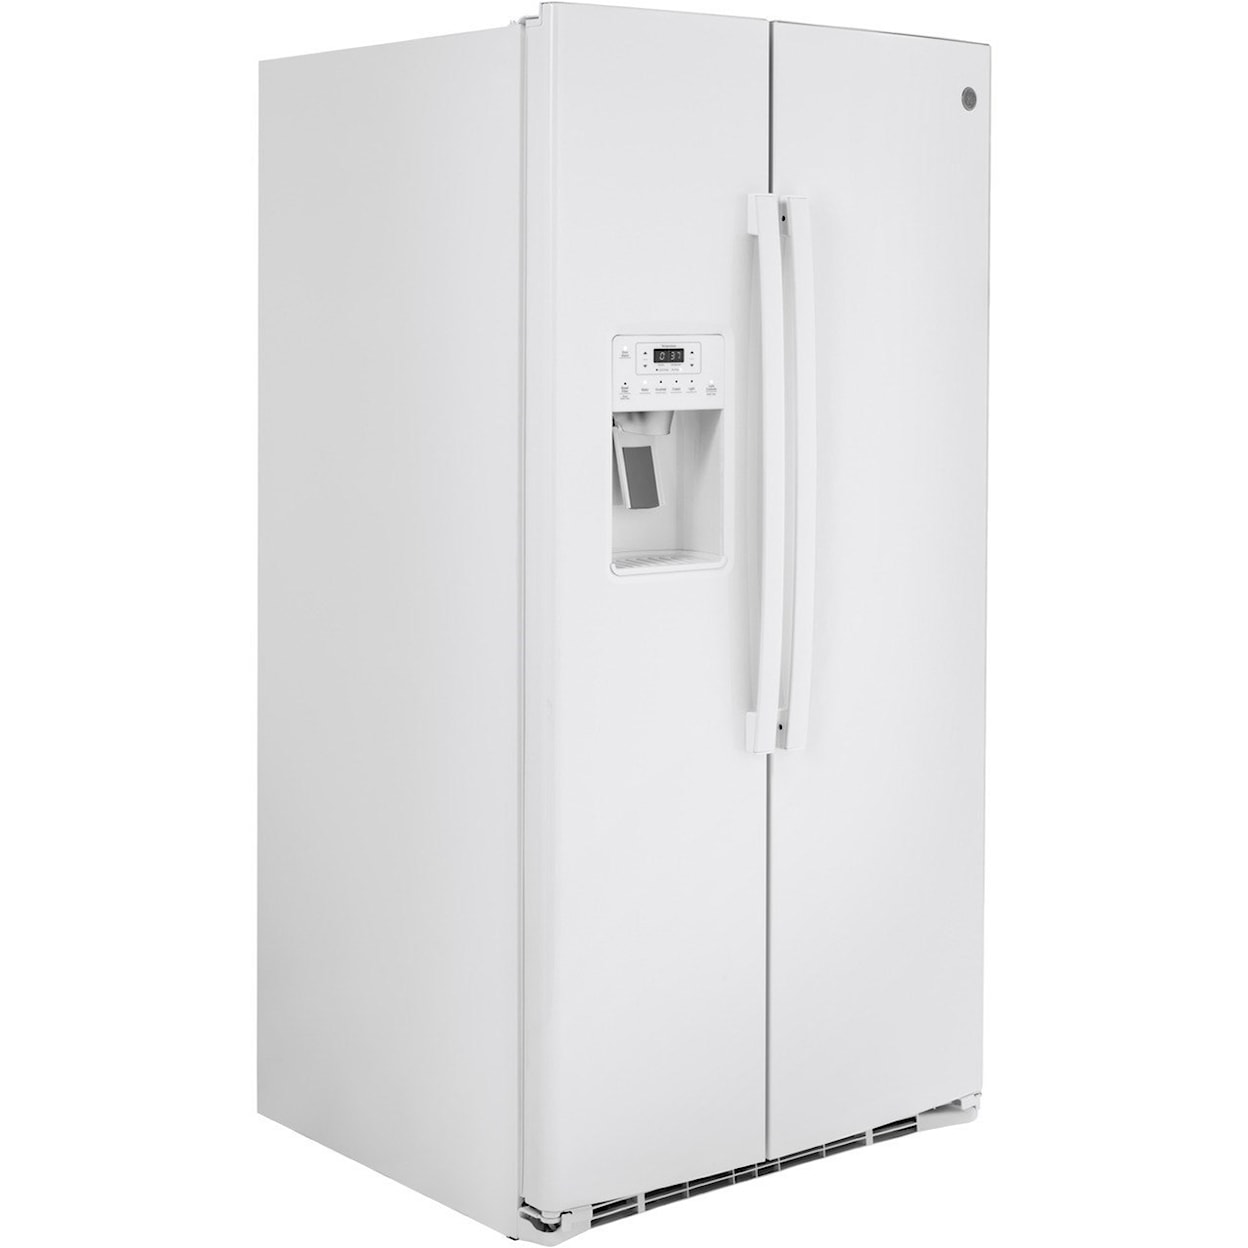 GE Appliances GE Series Side-By-Side Refrigerators GE® 25.3 Cu. Ft. Side-By-Side Refrigerator